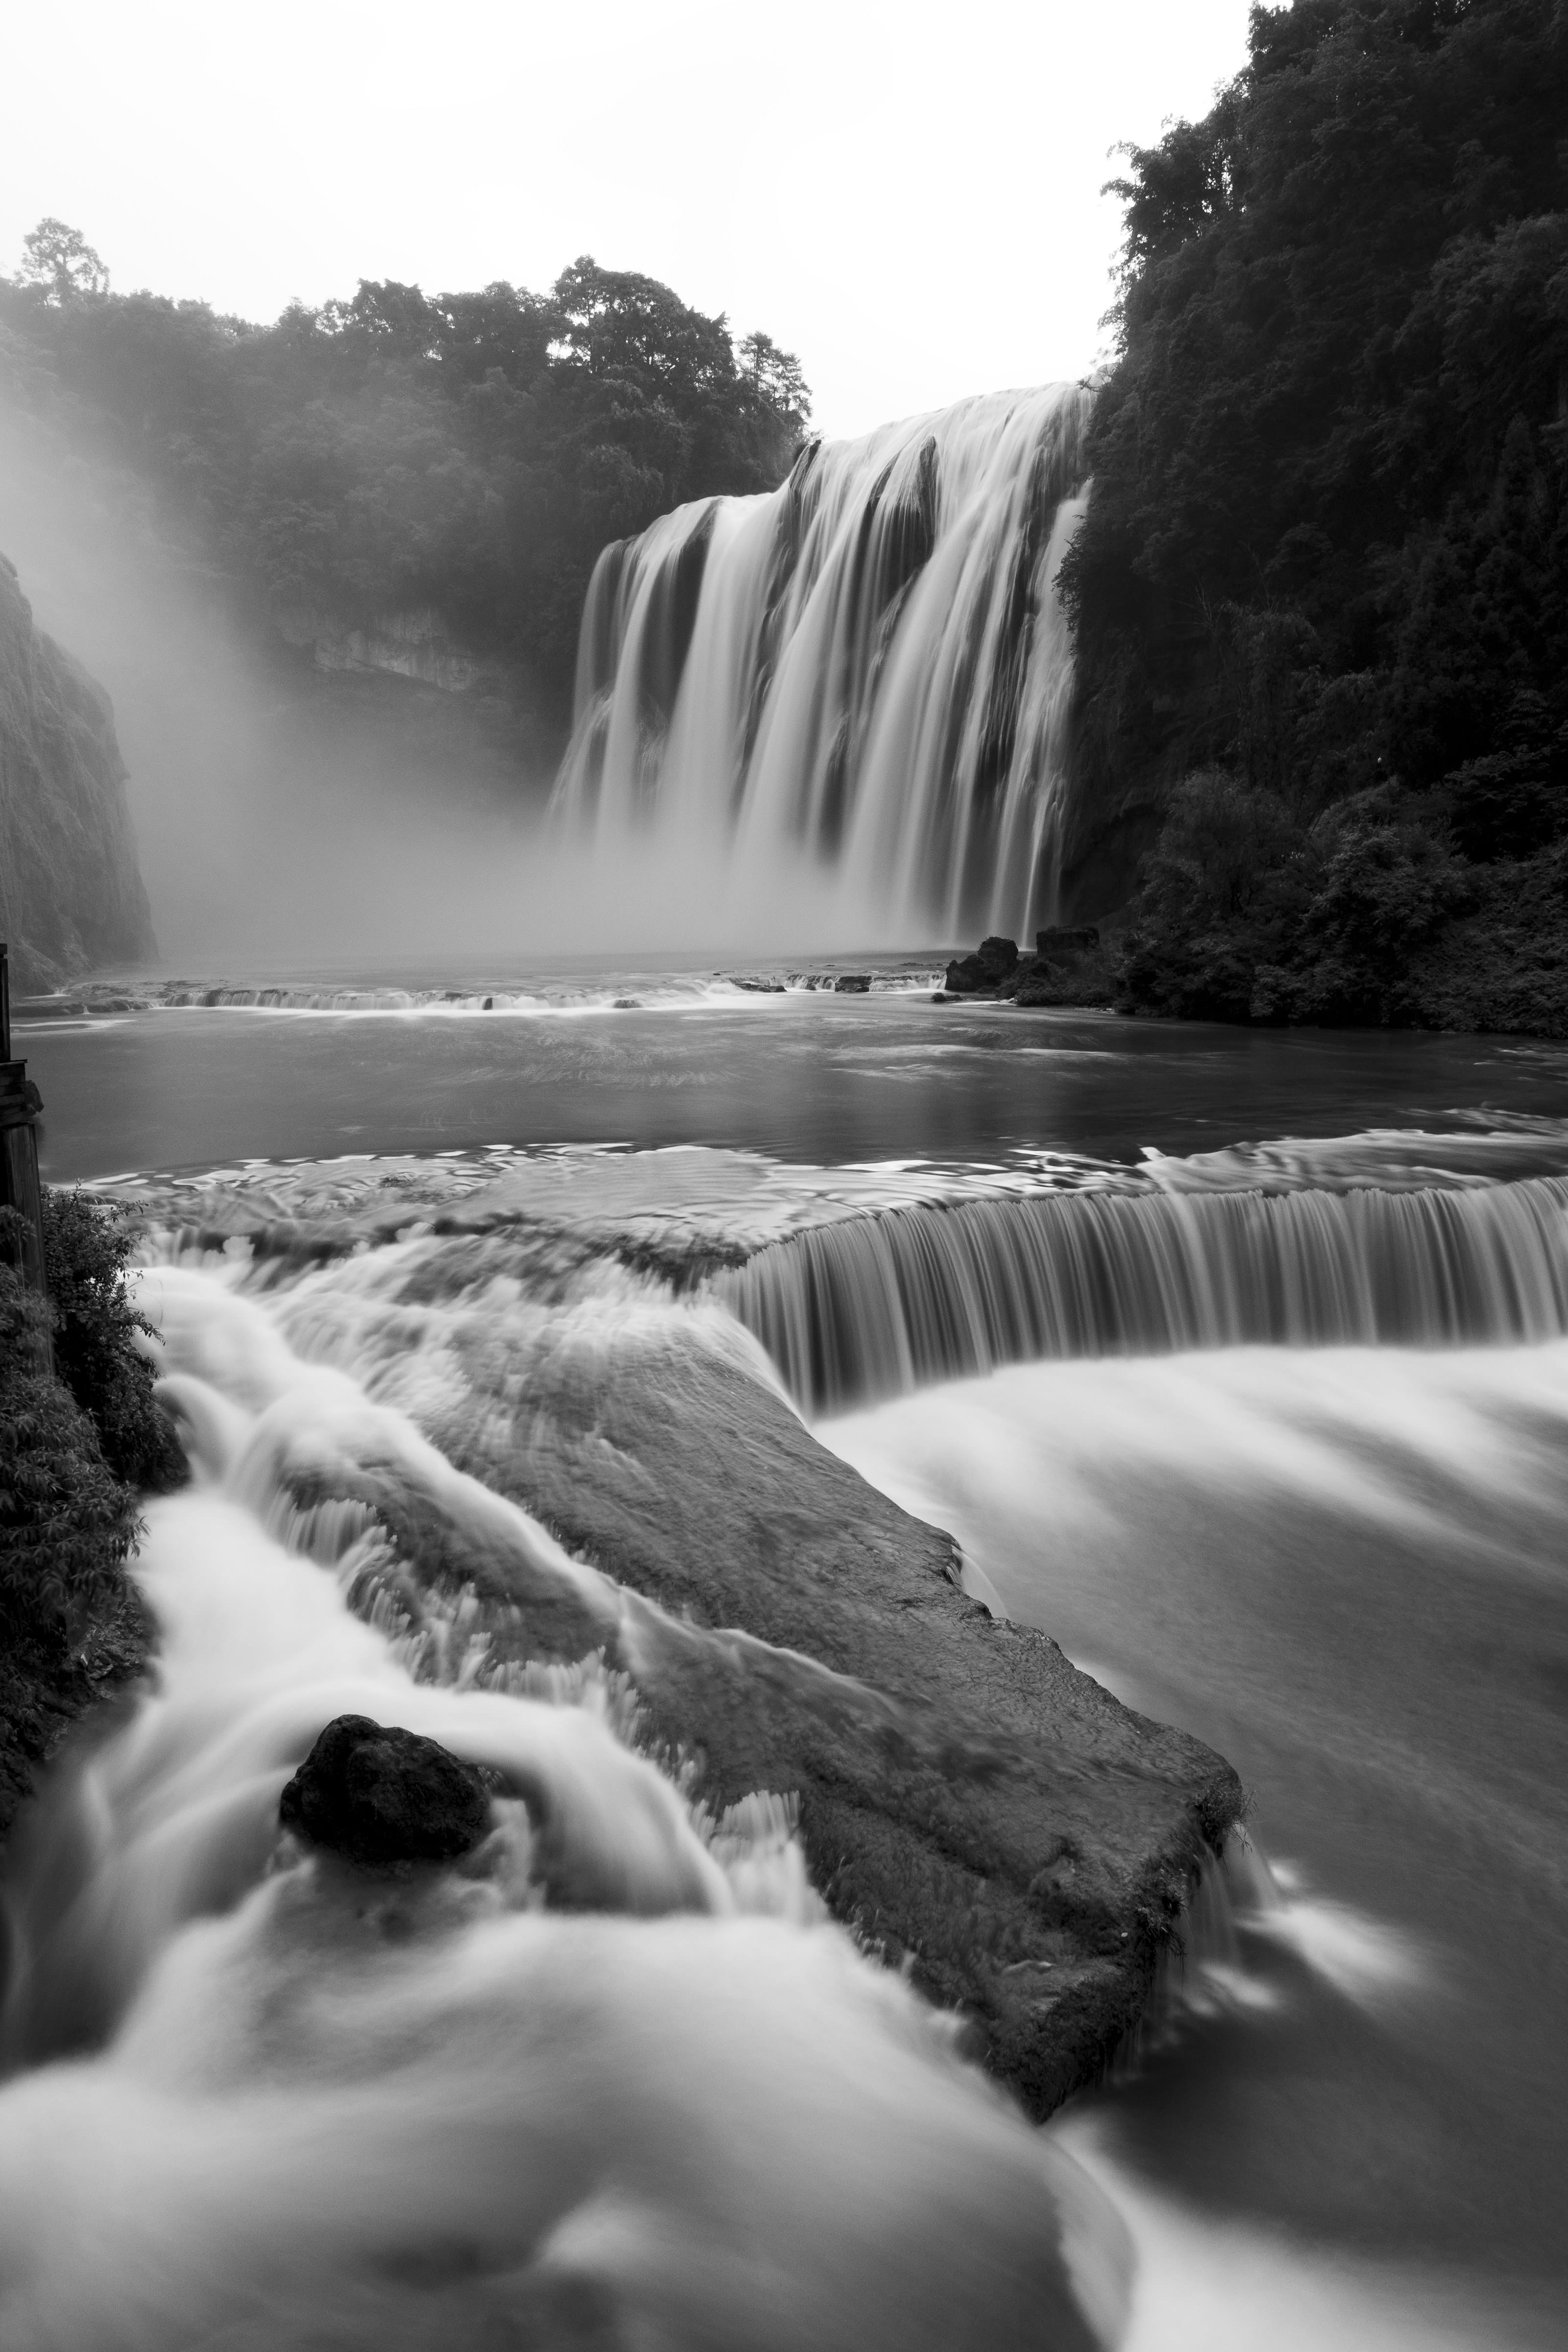 grayscale photography of waterfall, outdoors, nature, river, huangguoshu waterfall